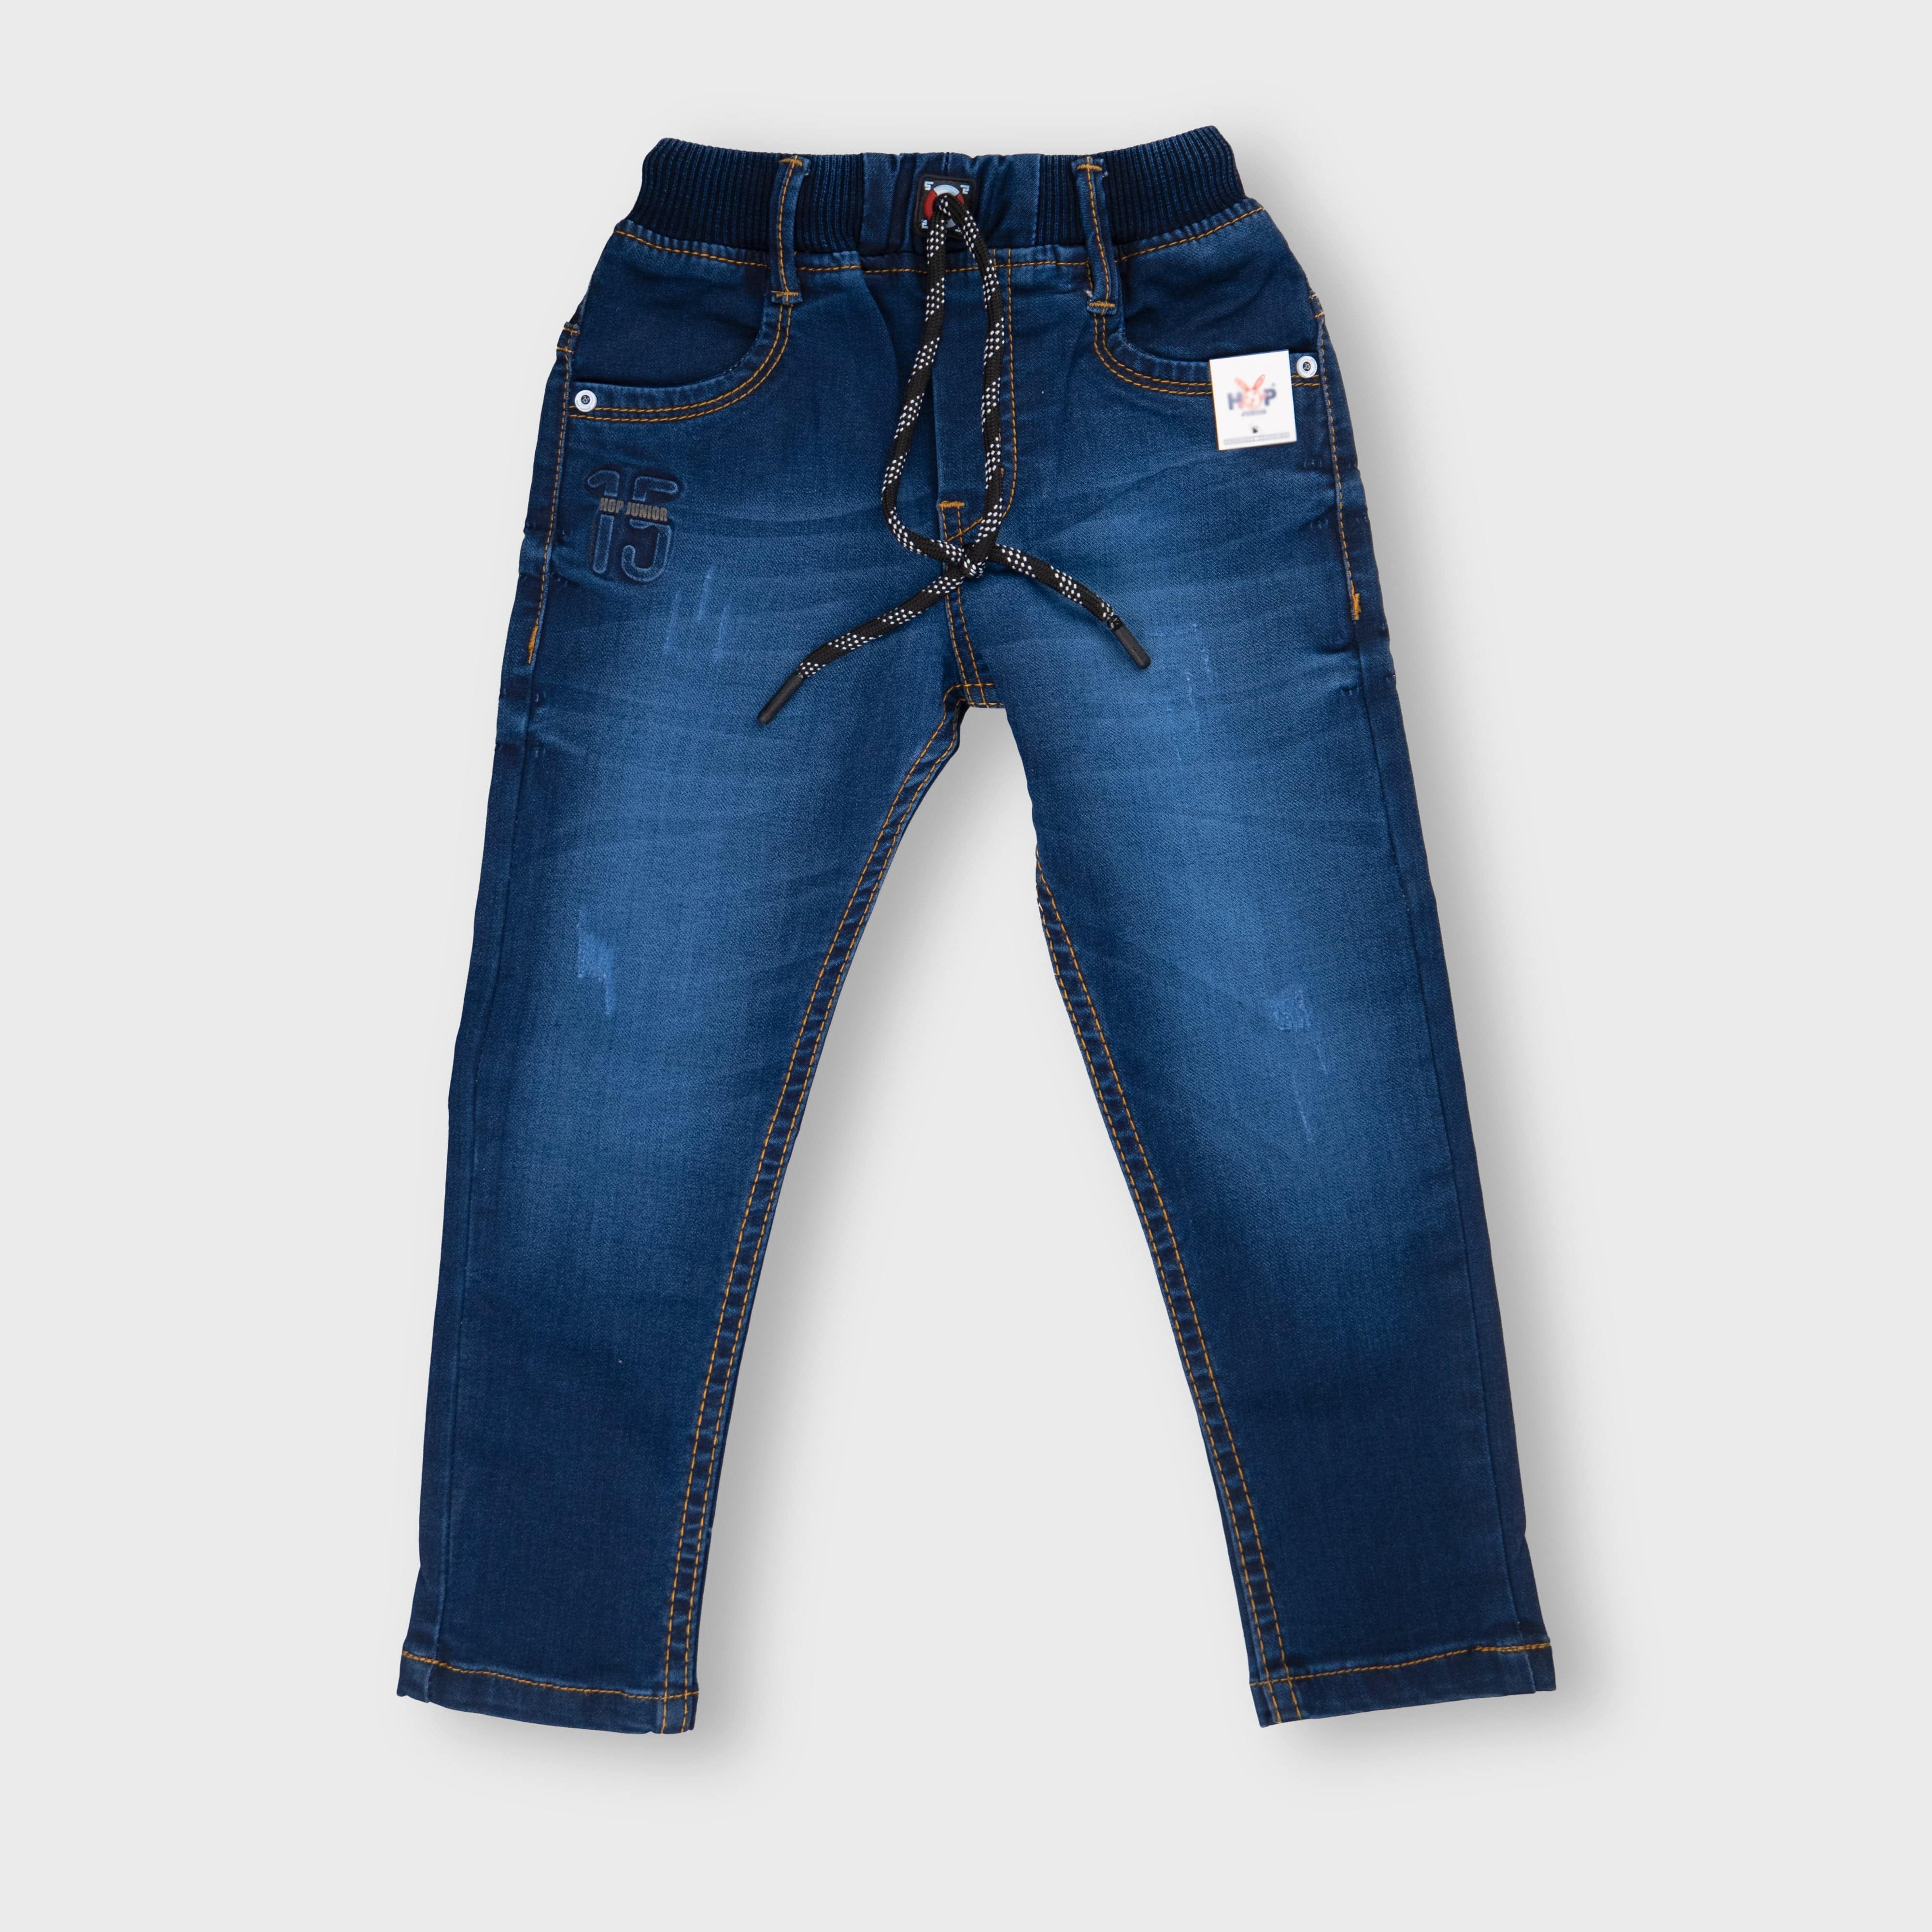 Washable Boys Denim Stylish Jeans at Best Price in Delhi | Anil Hosiery